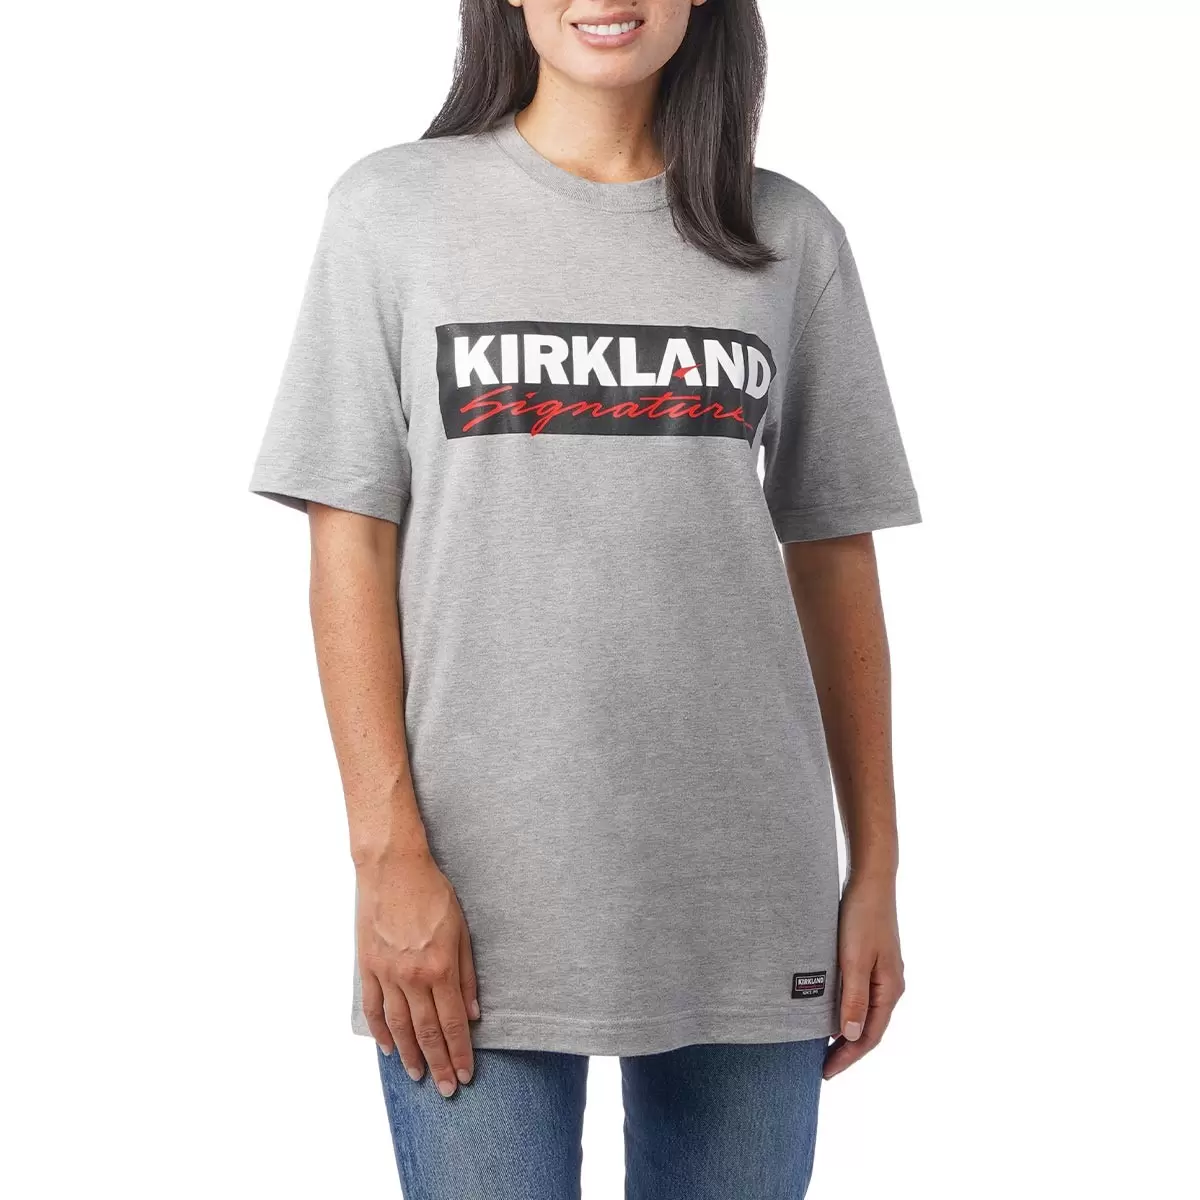 Kirkland Signature 科克蘭 Logo 短袖上衣